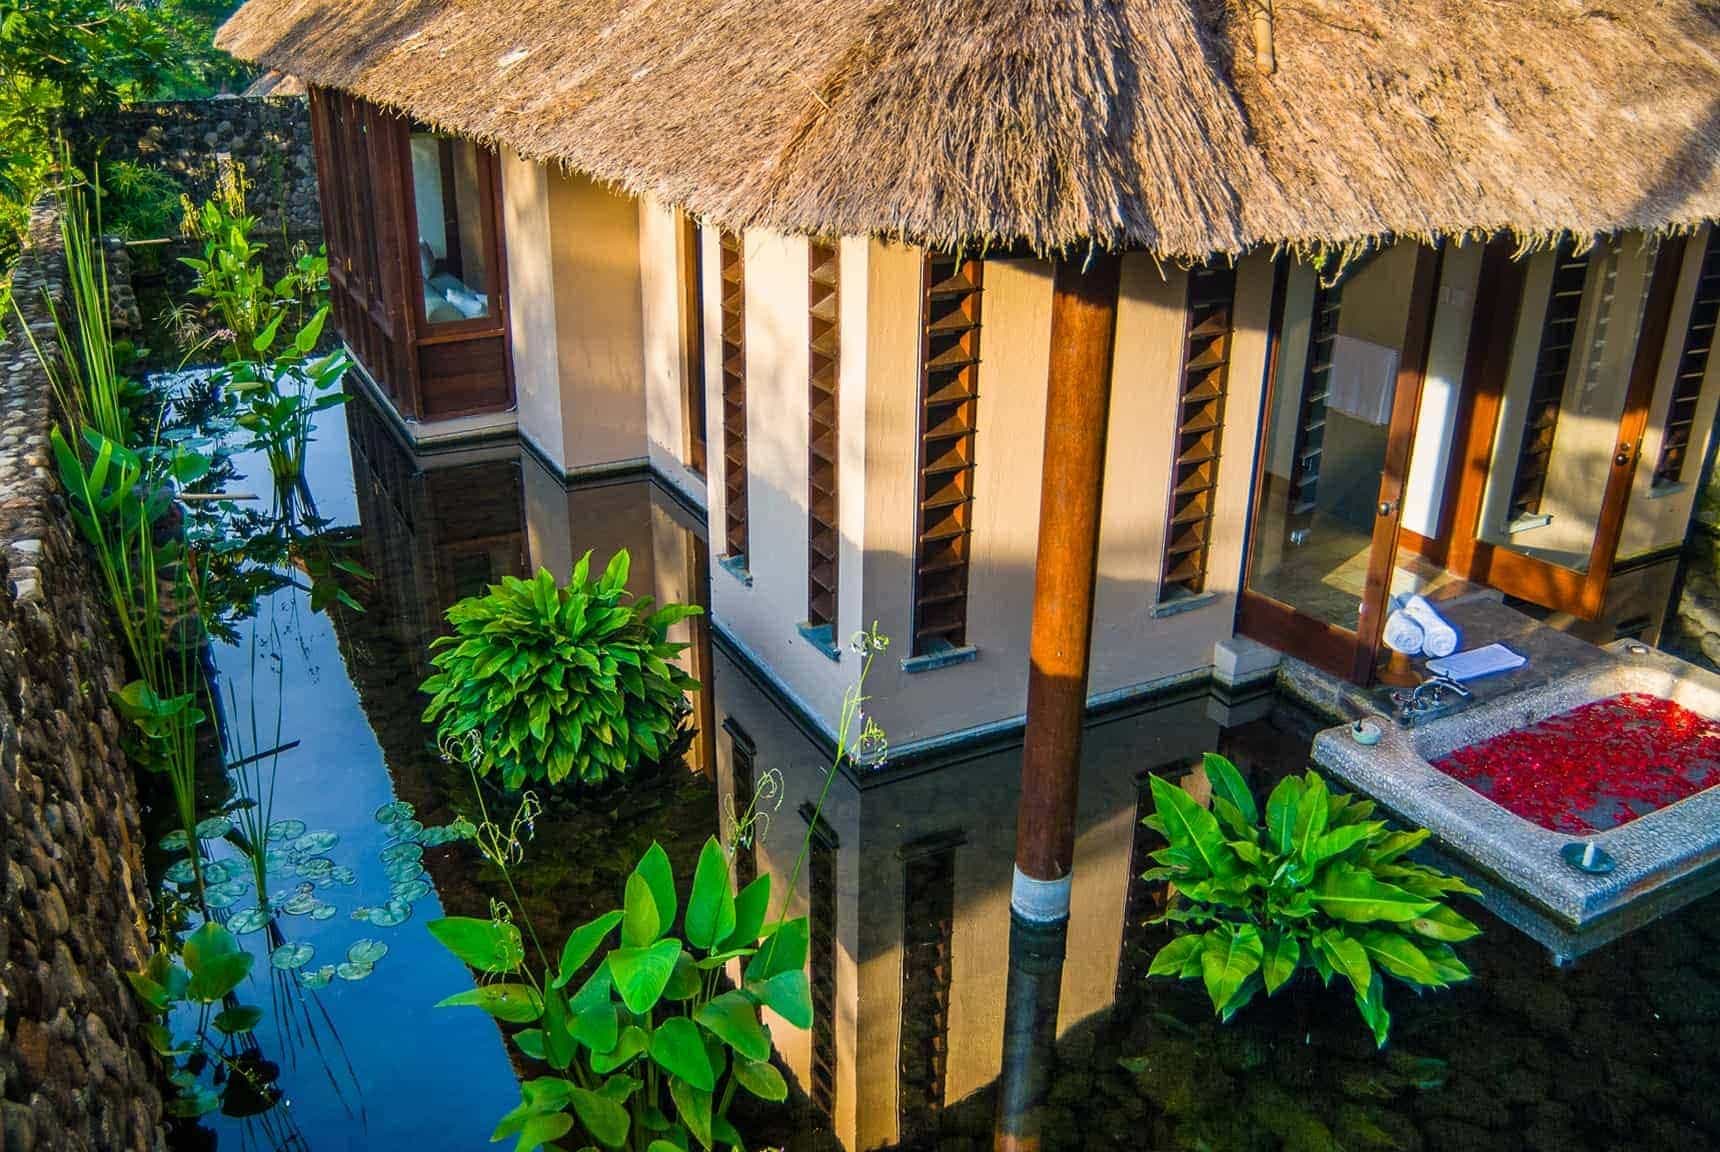 Alila Hotels and Resorts - Ubud, Bali Indonesia (Bali hotel photography by master photographer Rick Carmichael of LuxViz)